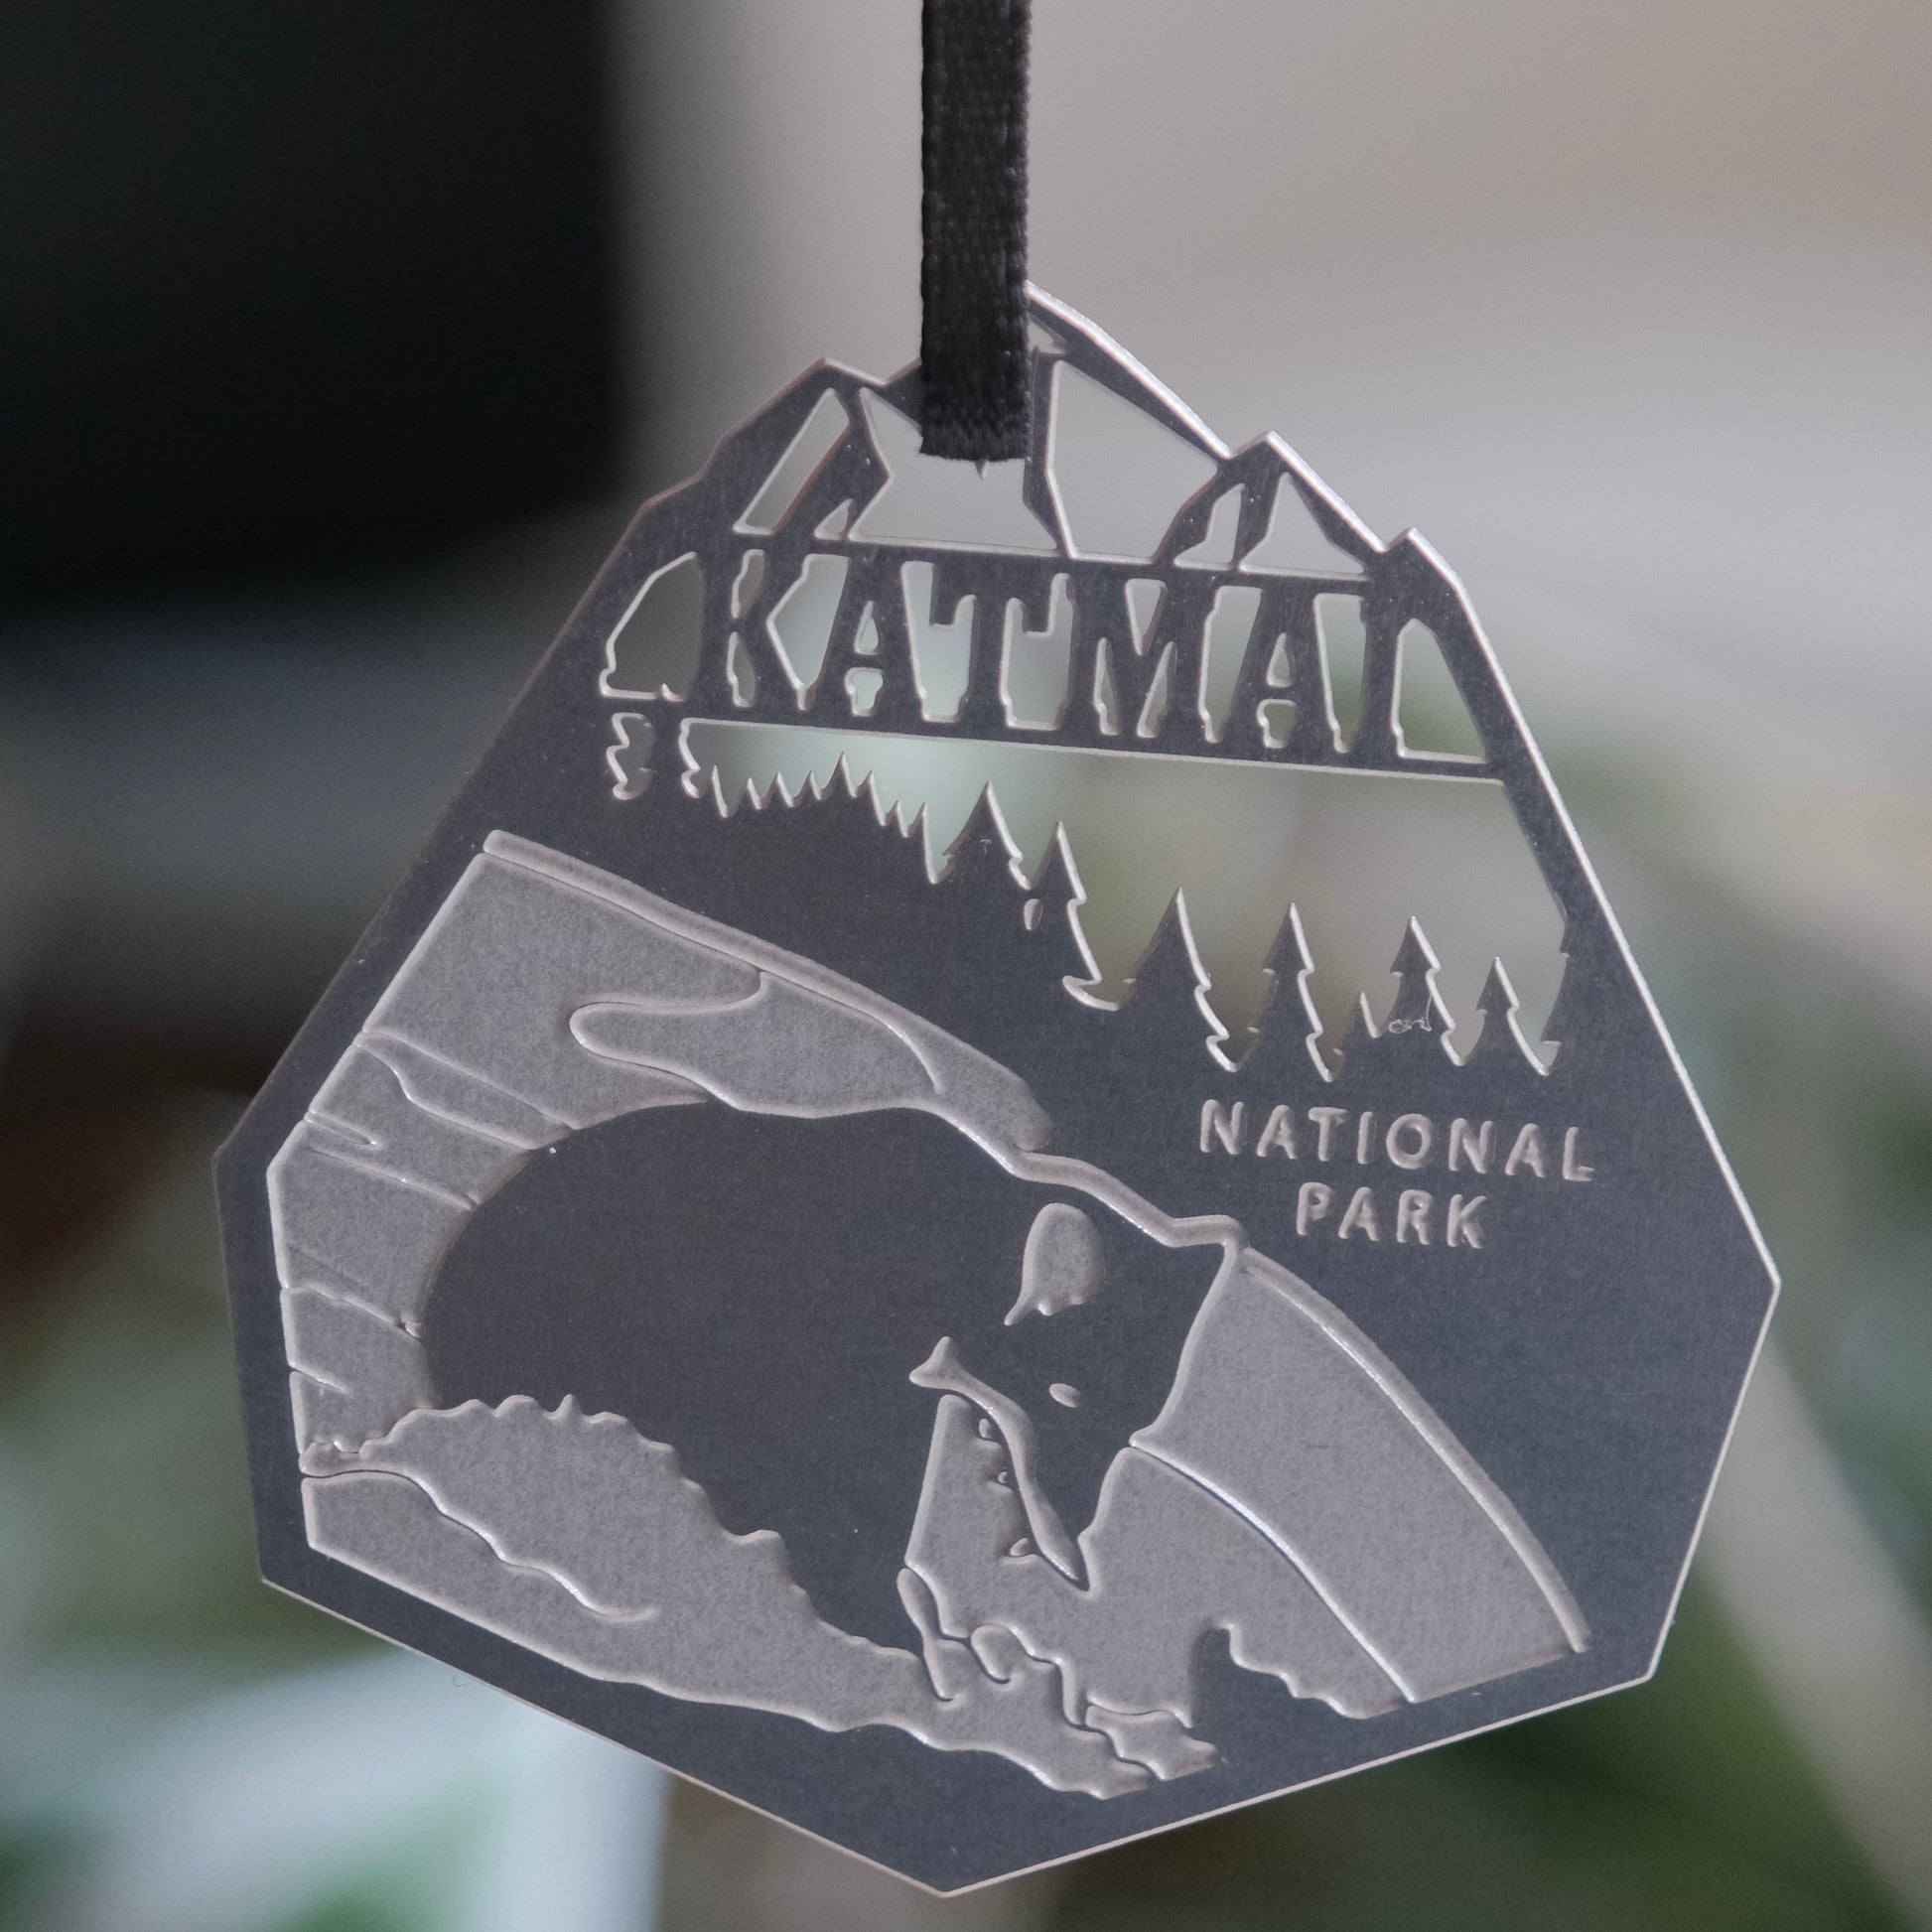 Katamai National park Gift ornament